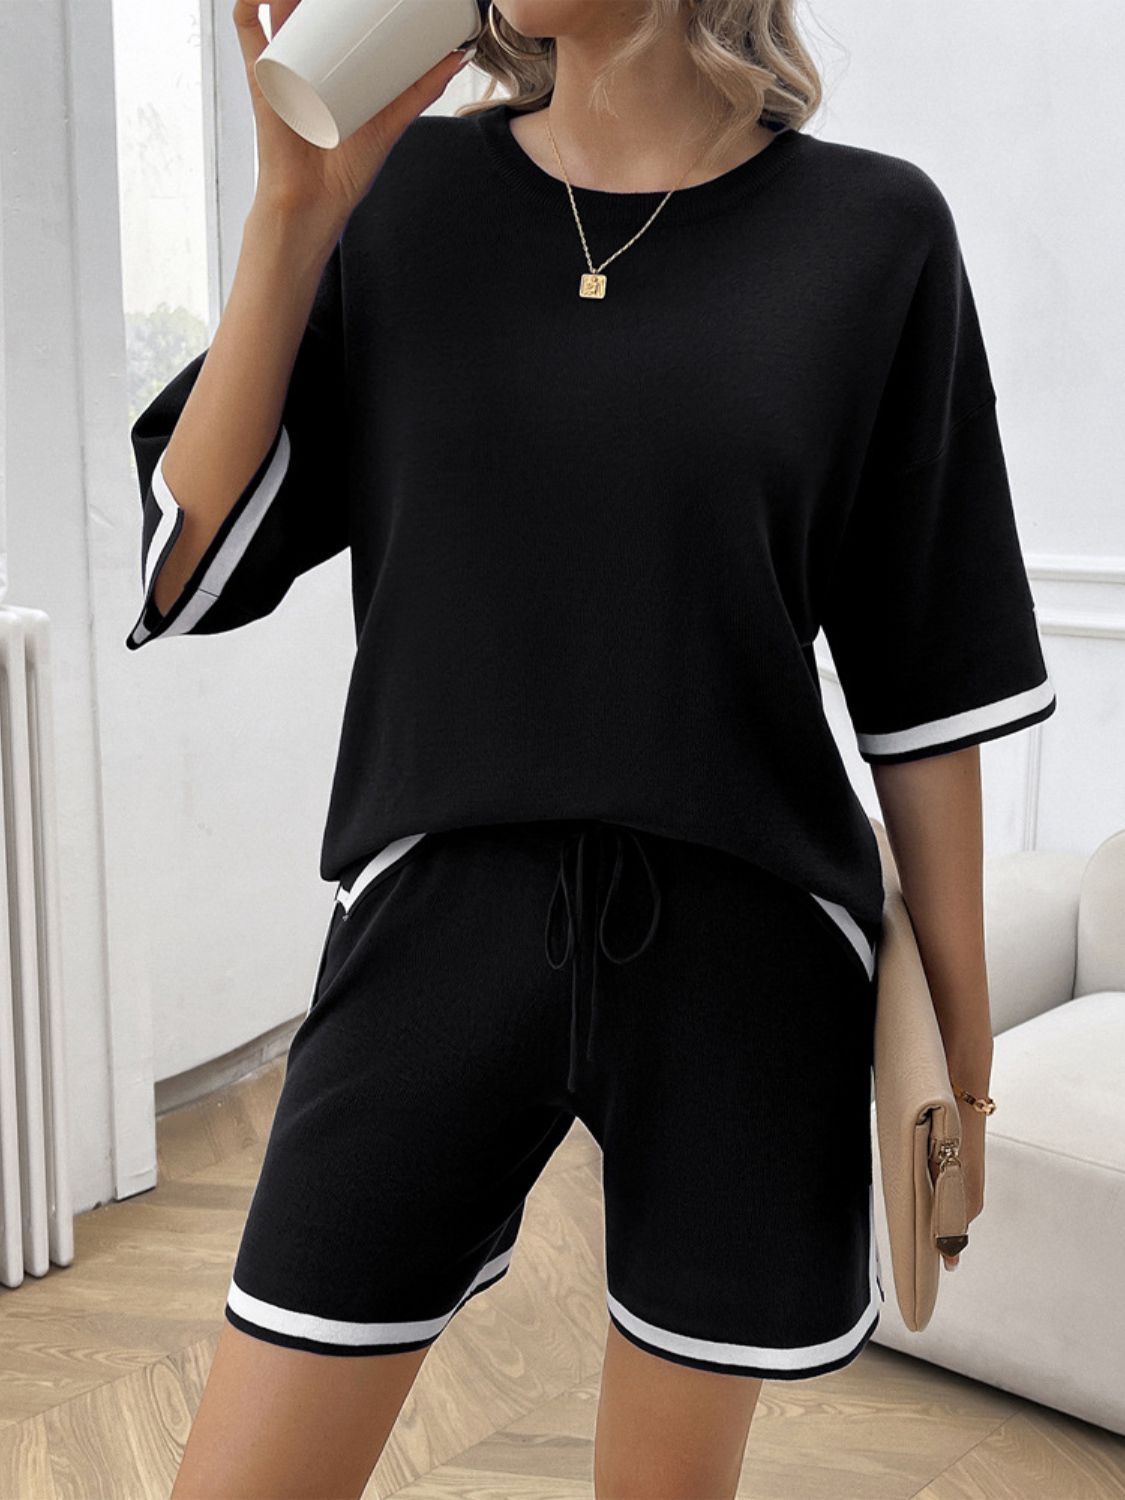 Black Contrast Trim Round Neck Top and Shorts Set Sentient Beauty Fashions Apaparel & Accessories